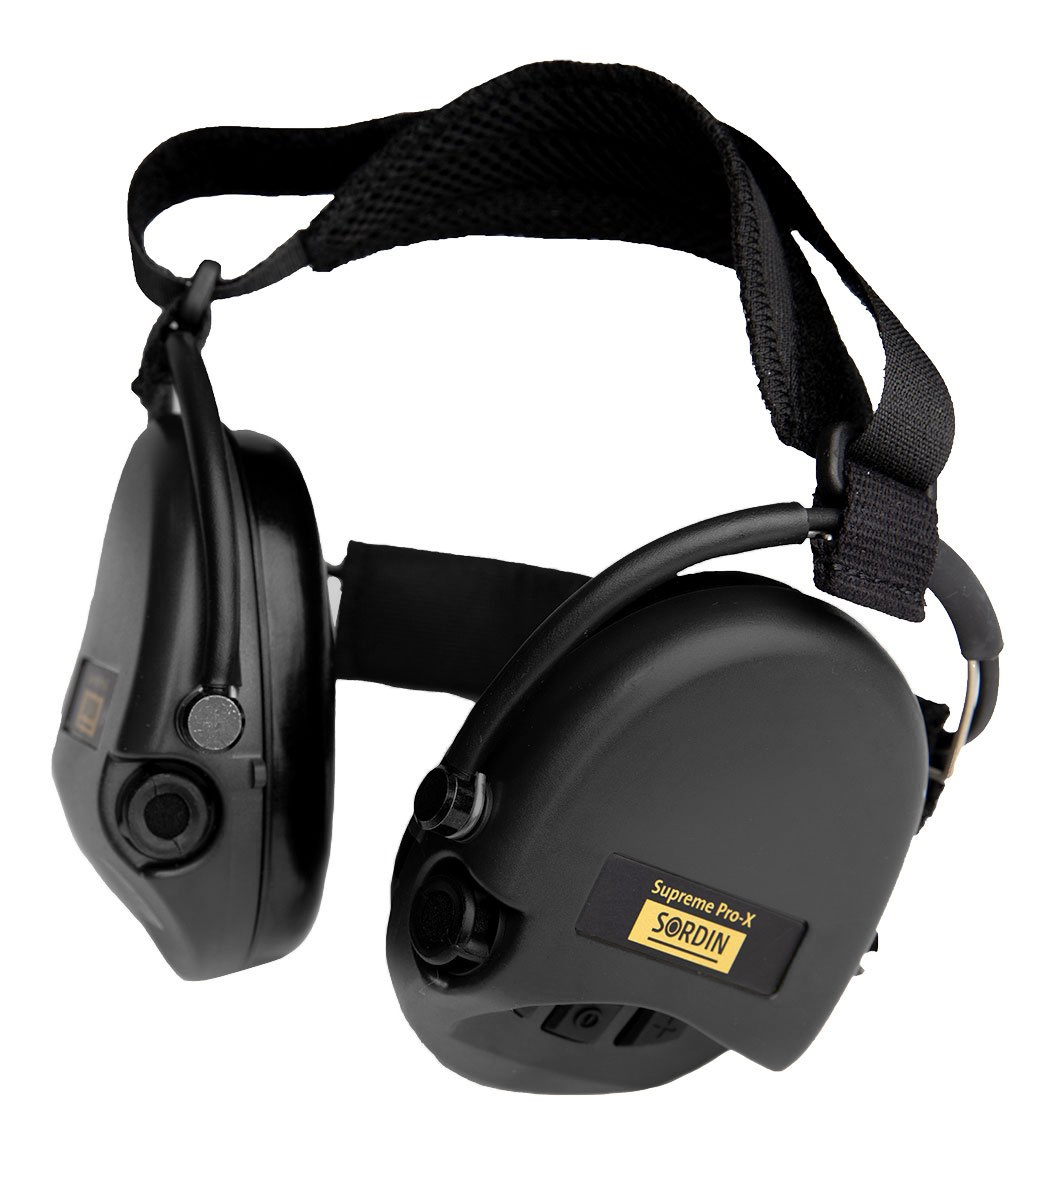 Sordin Supreme Pro-X 1.1 Neckband hearing protectors, Black